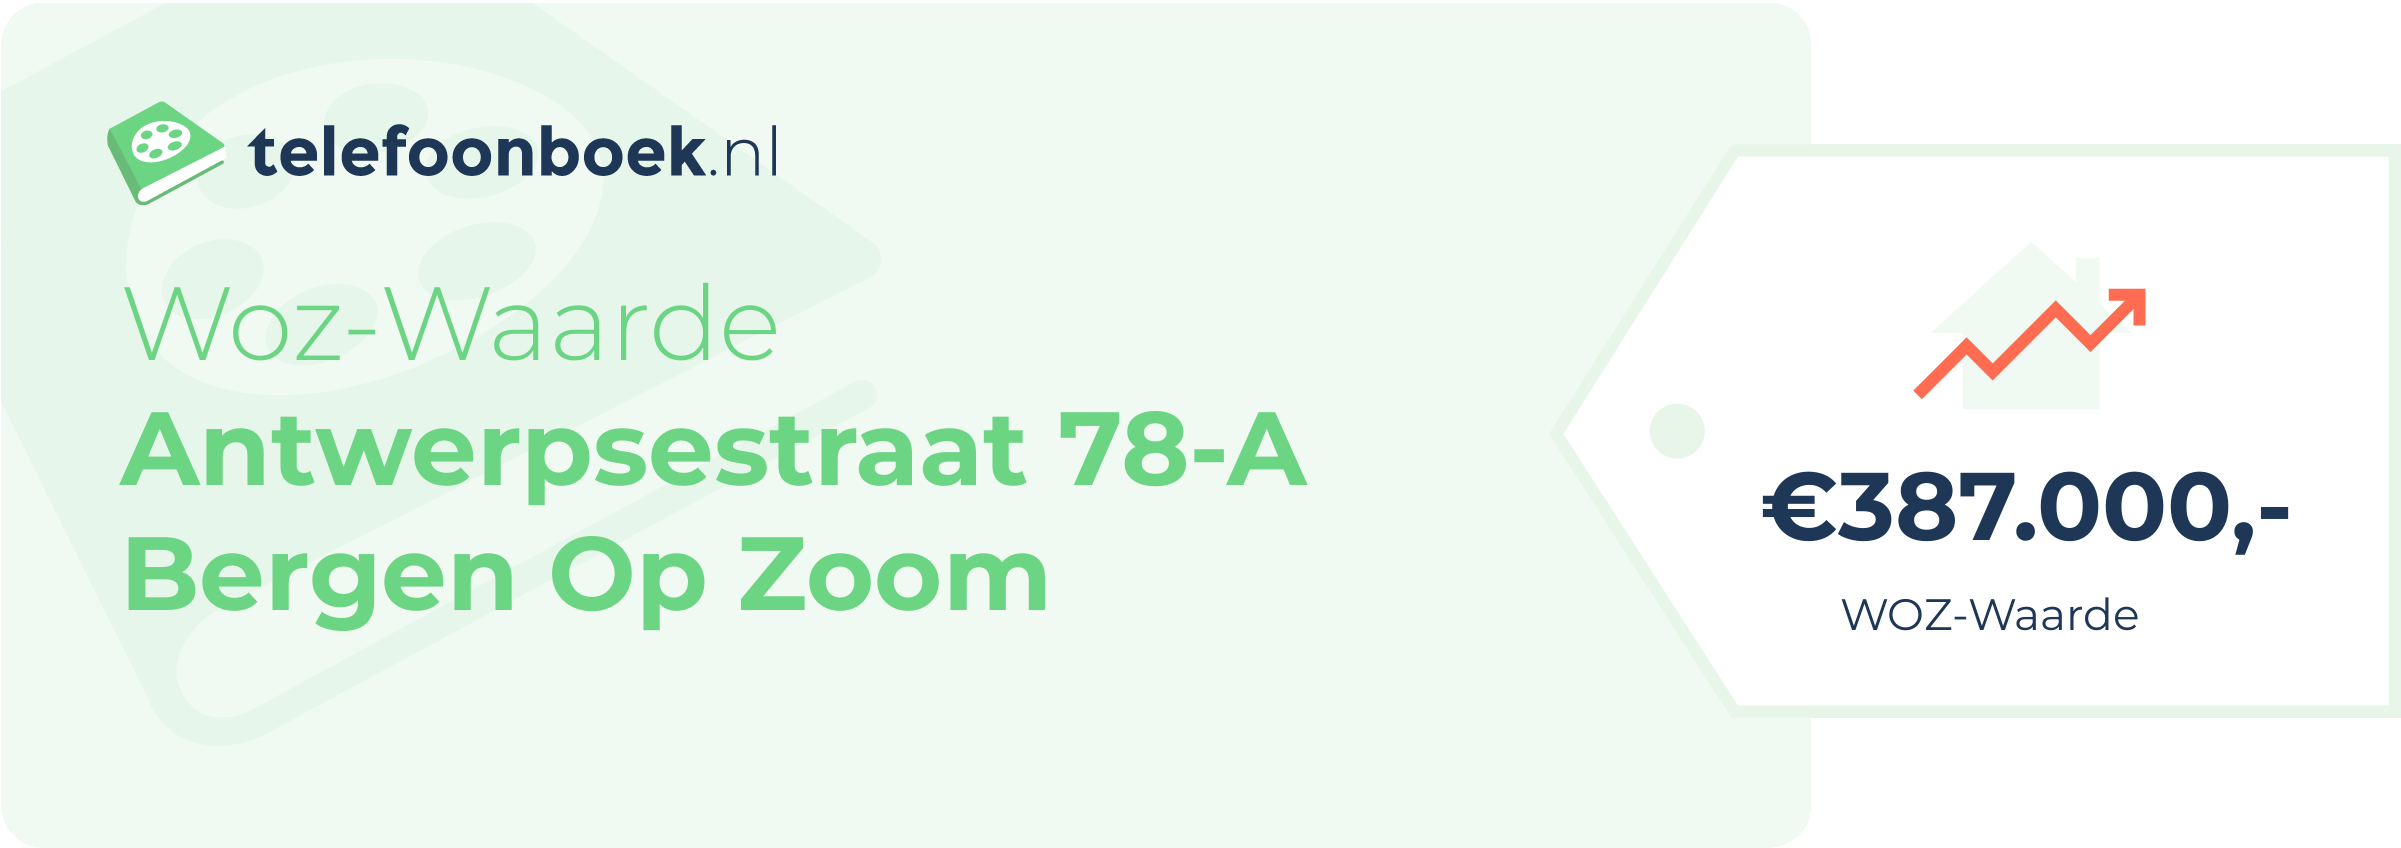 WOZ-waarde Antwerpsestraat 78-A Bergen Op Zoom